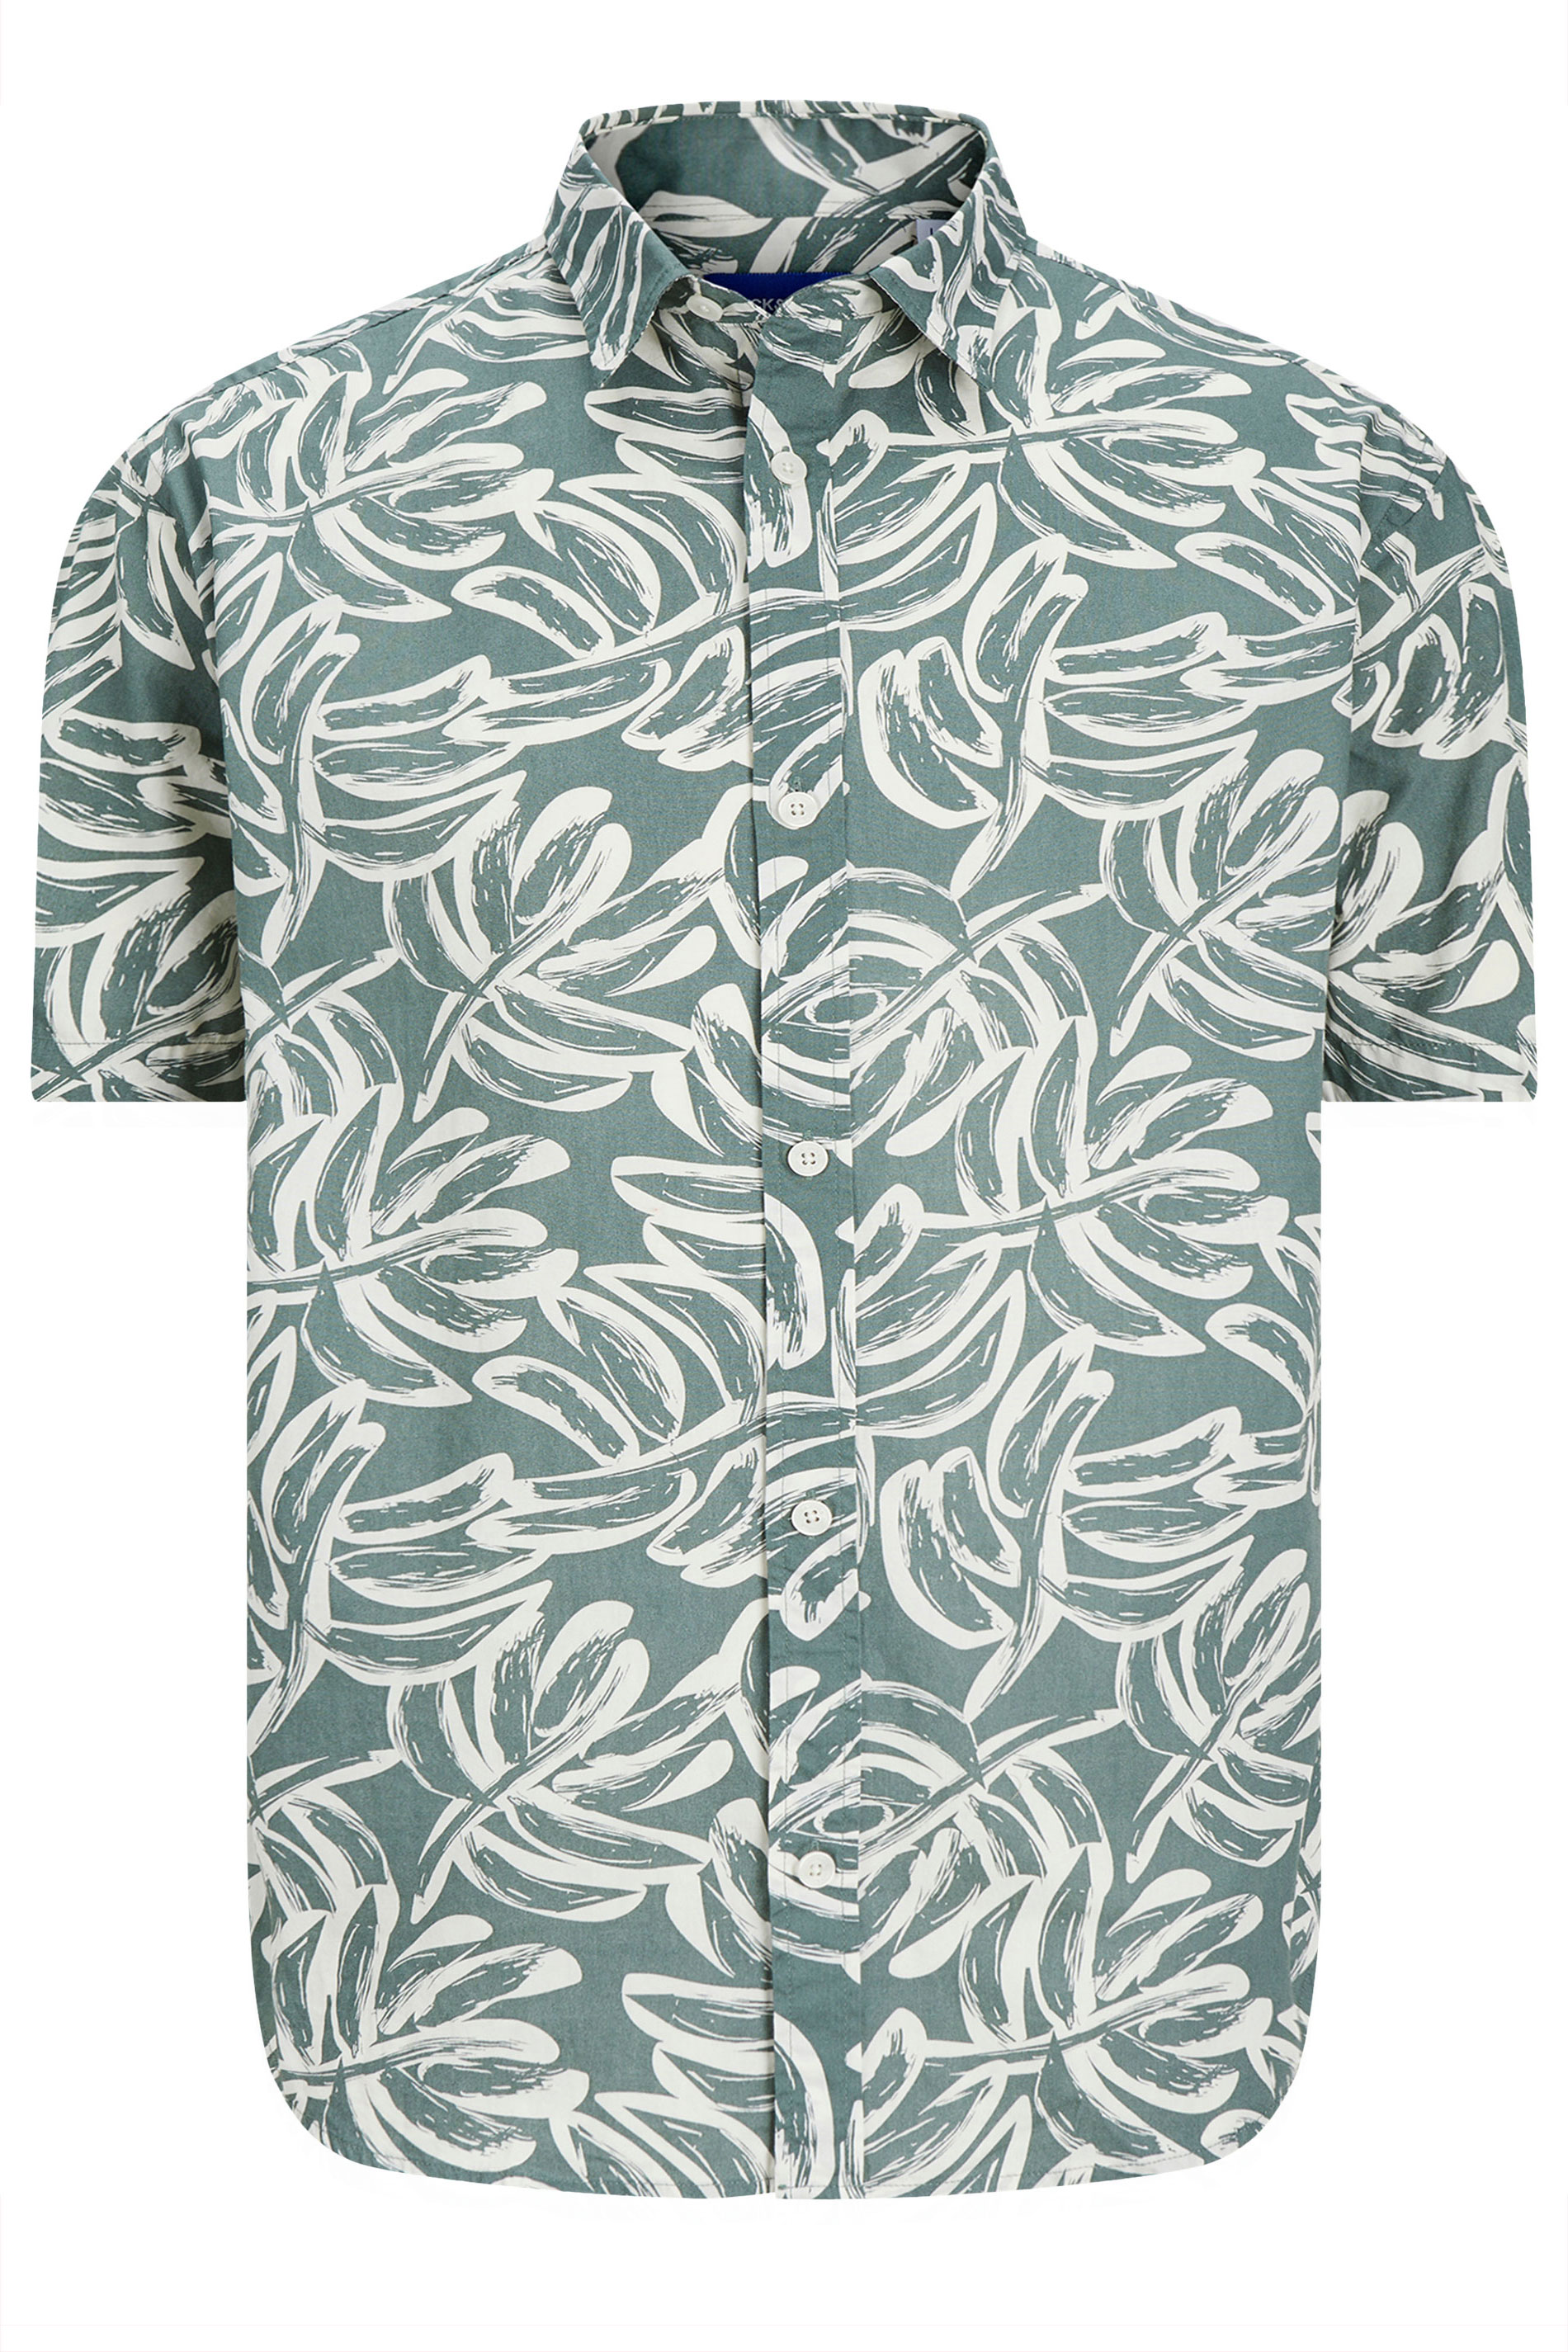 JACK & JONES Big & Tall Green Tropical Printed Shirt | BadRhino 2